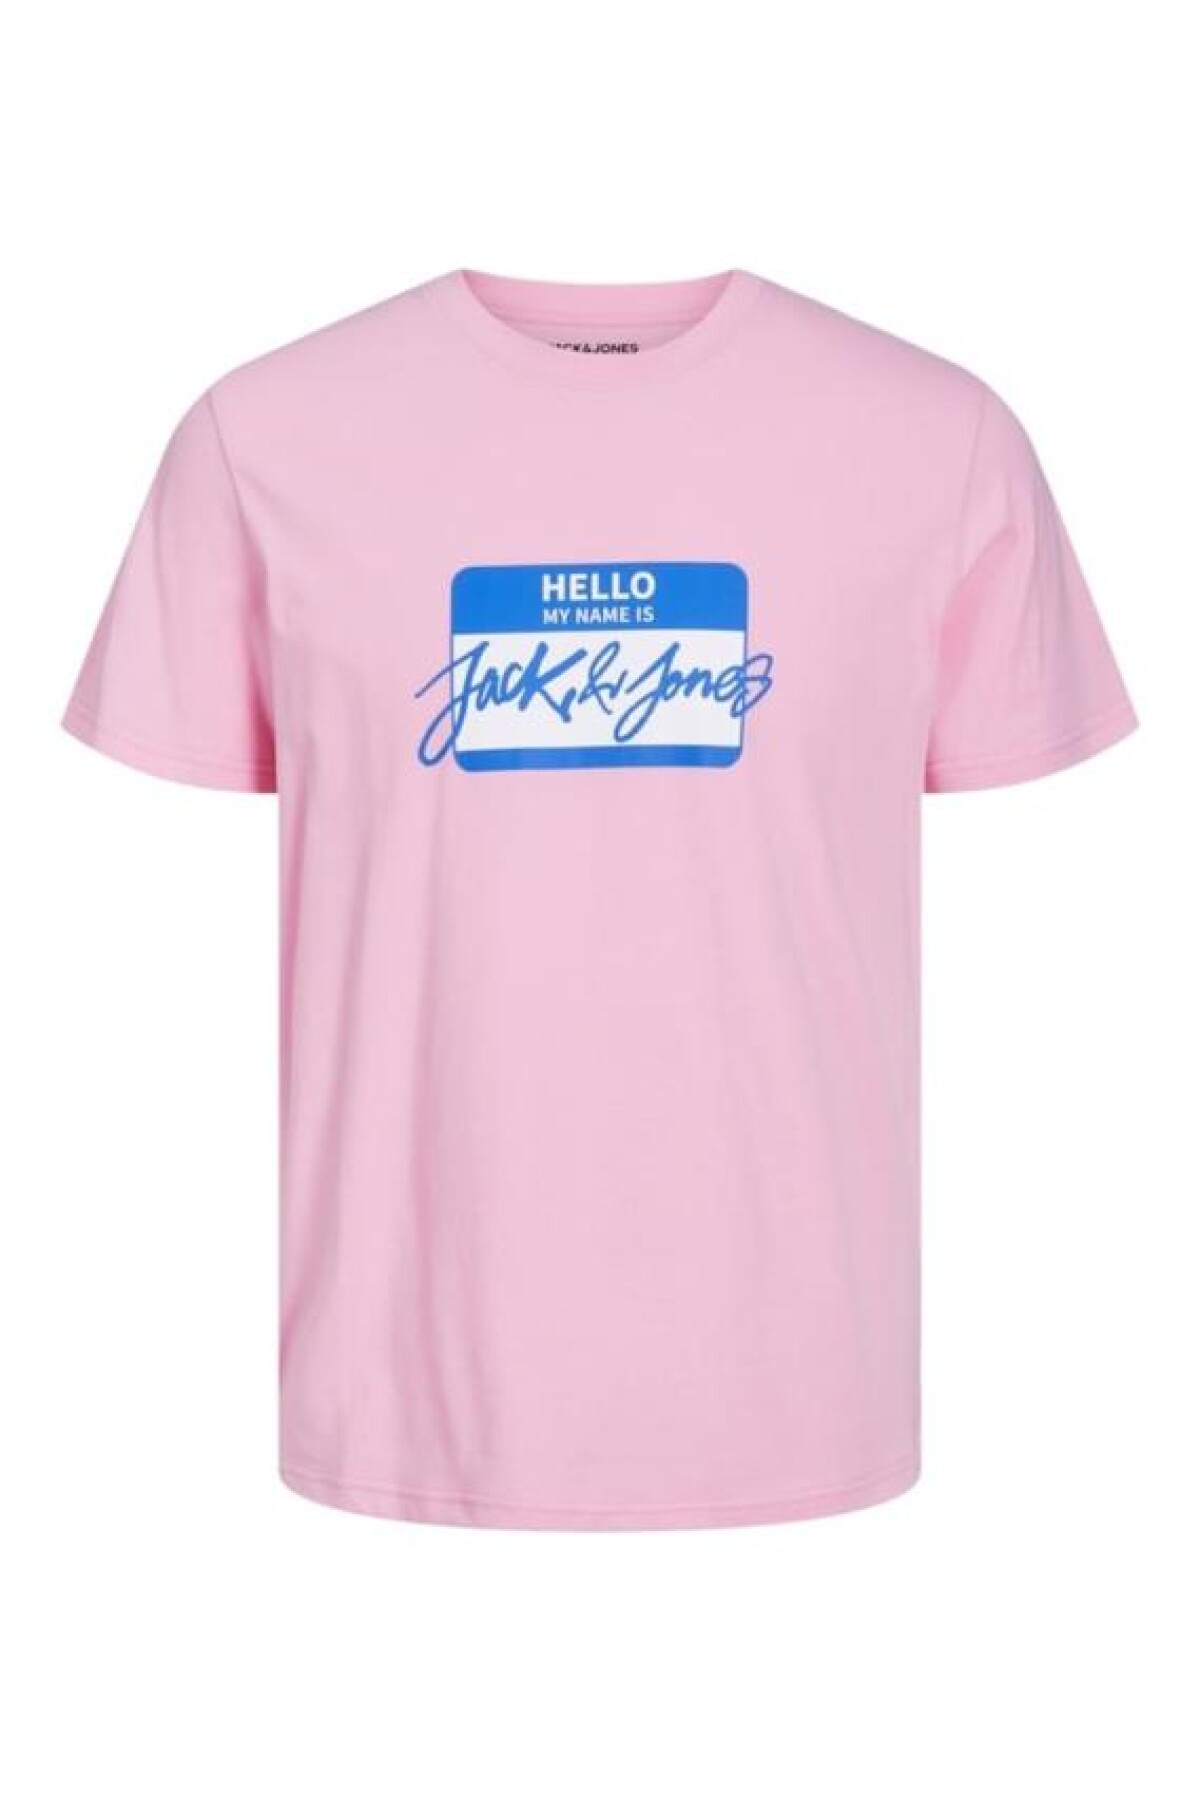 Camiseta Estampado Grafitti Y Textos Glow Prism Pink